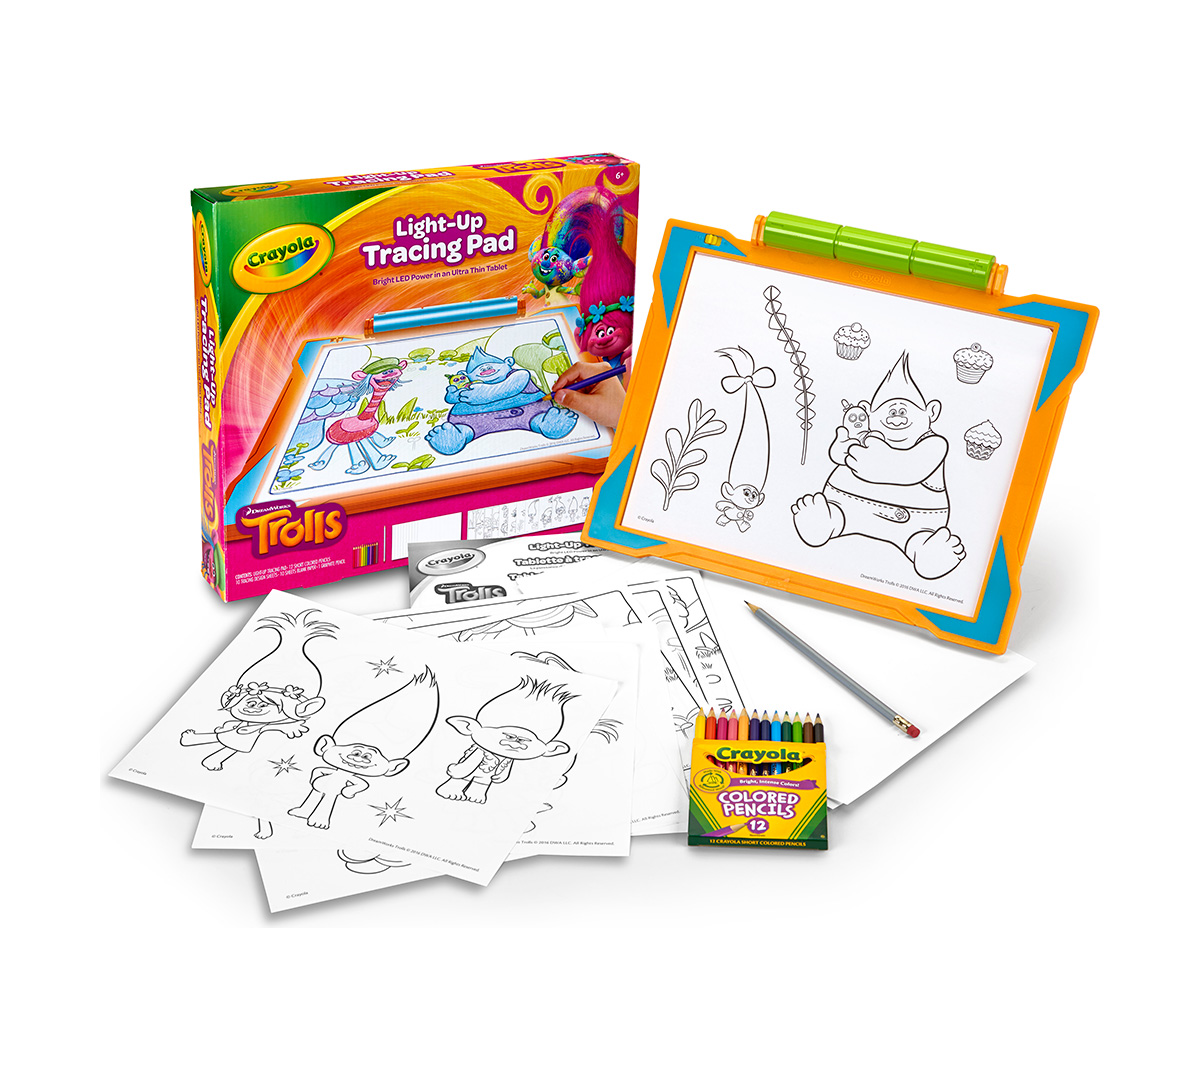 Trolls Light Up Tracing Pad for Kids | Crayola.com | Crayola